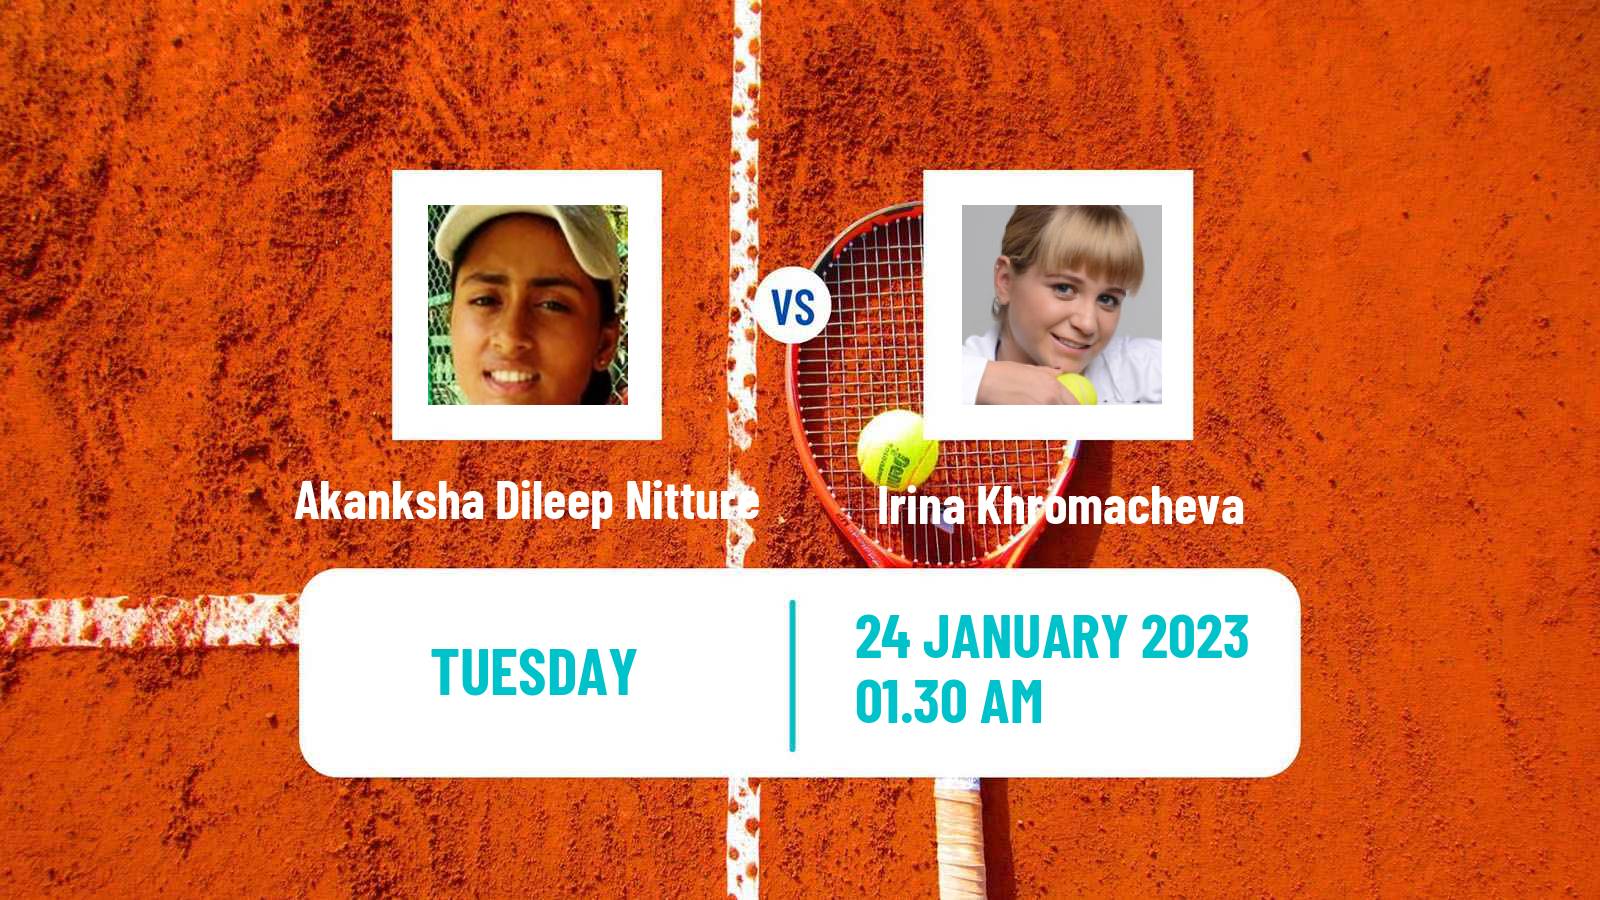 Tennis ITF Tournaments Akanksha Dileep Nitture - Irina Khromacheva